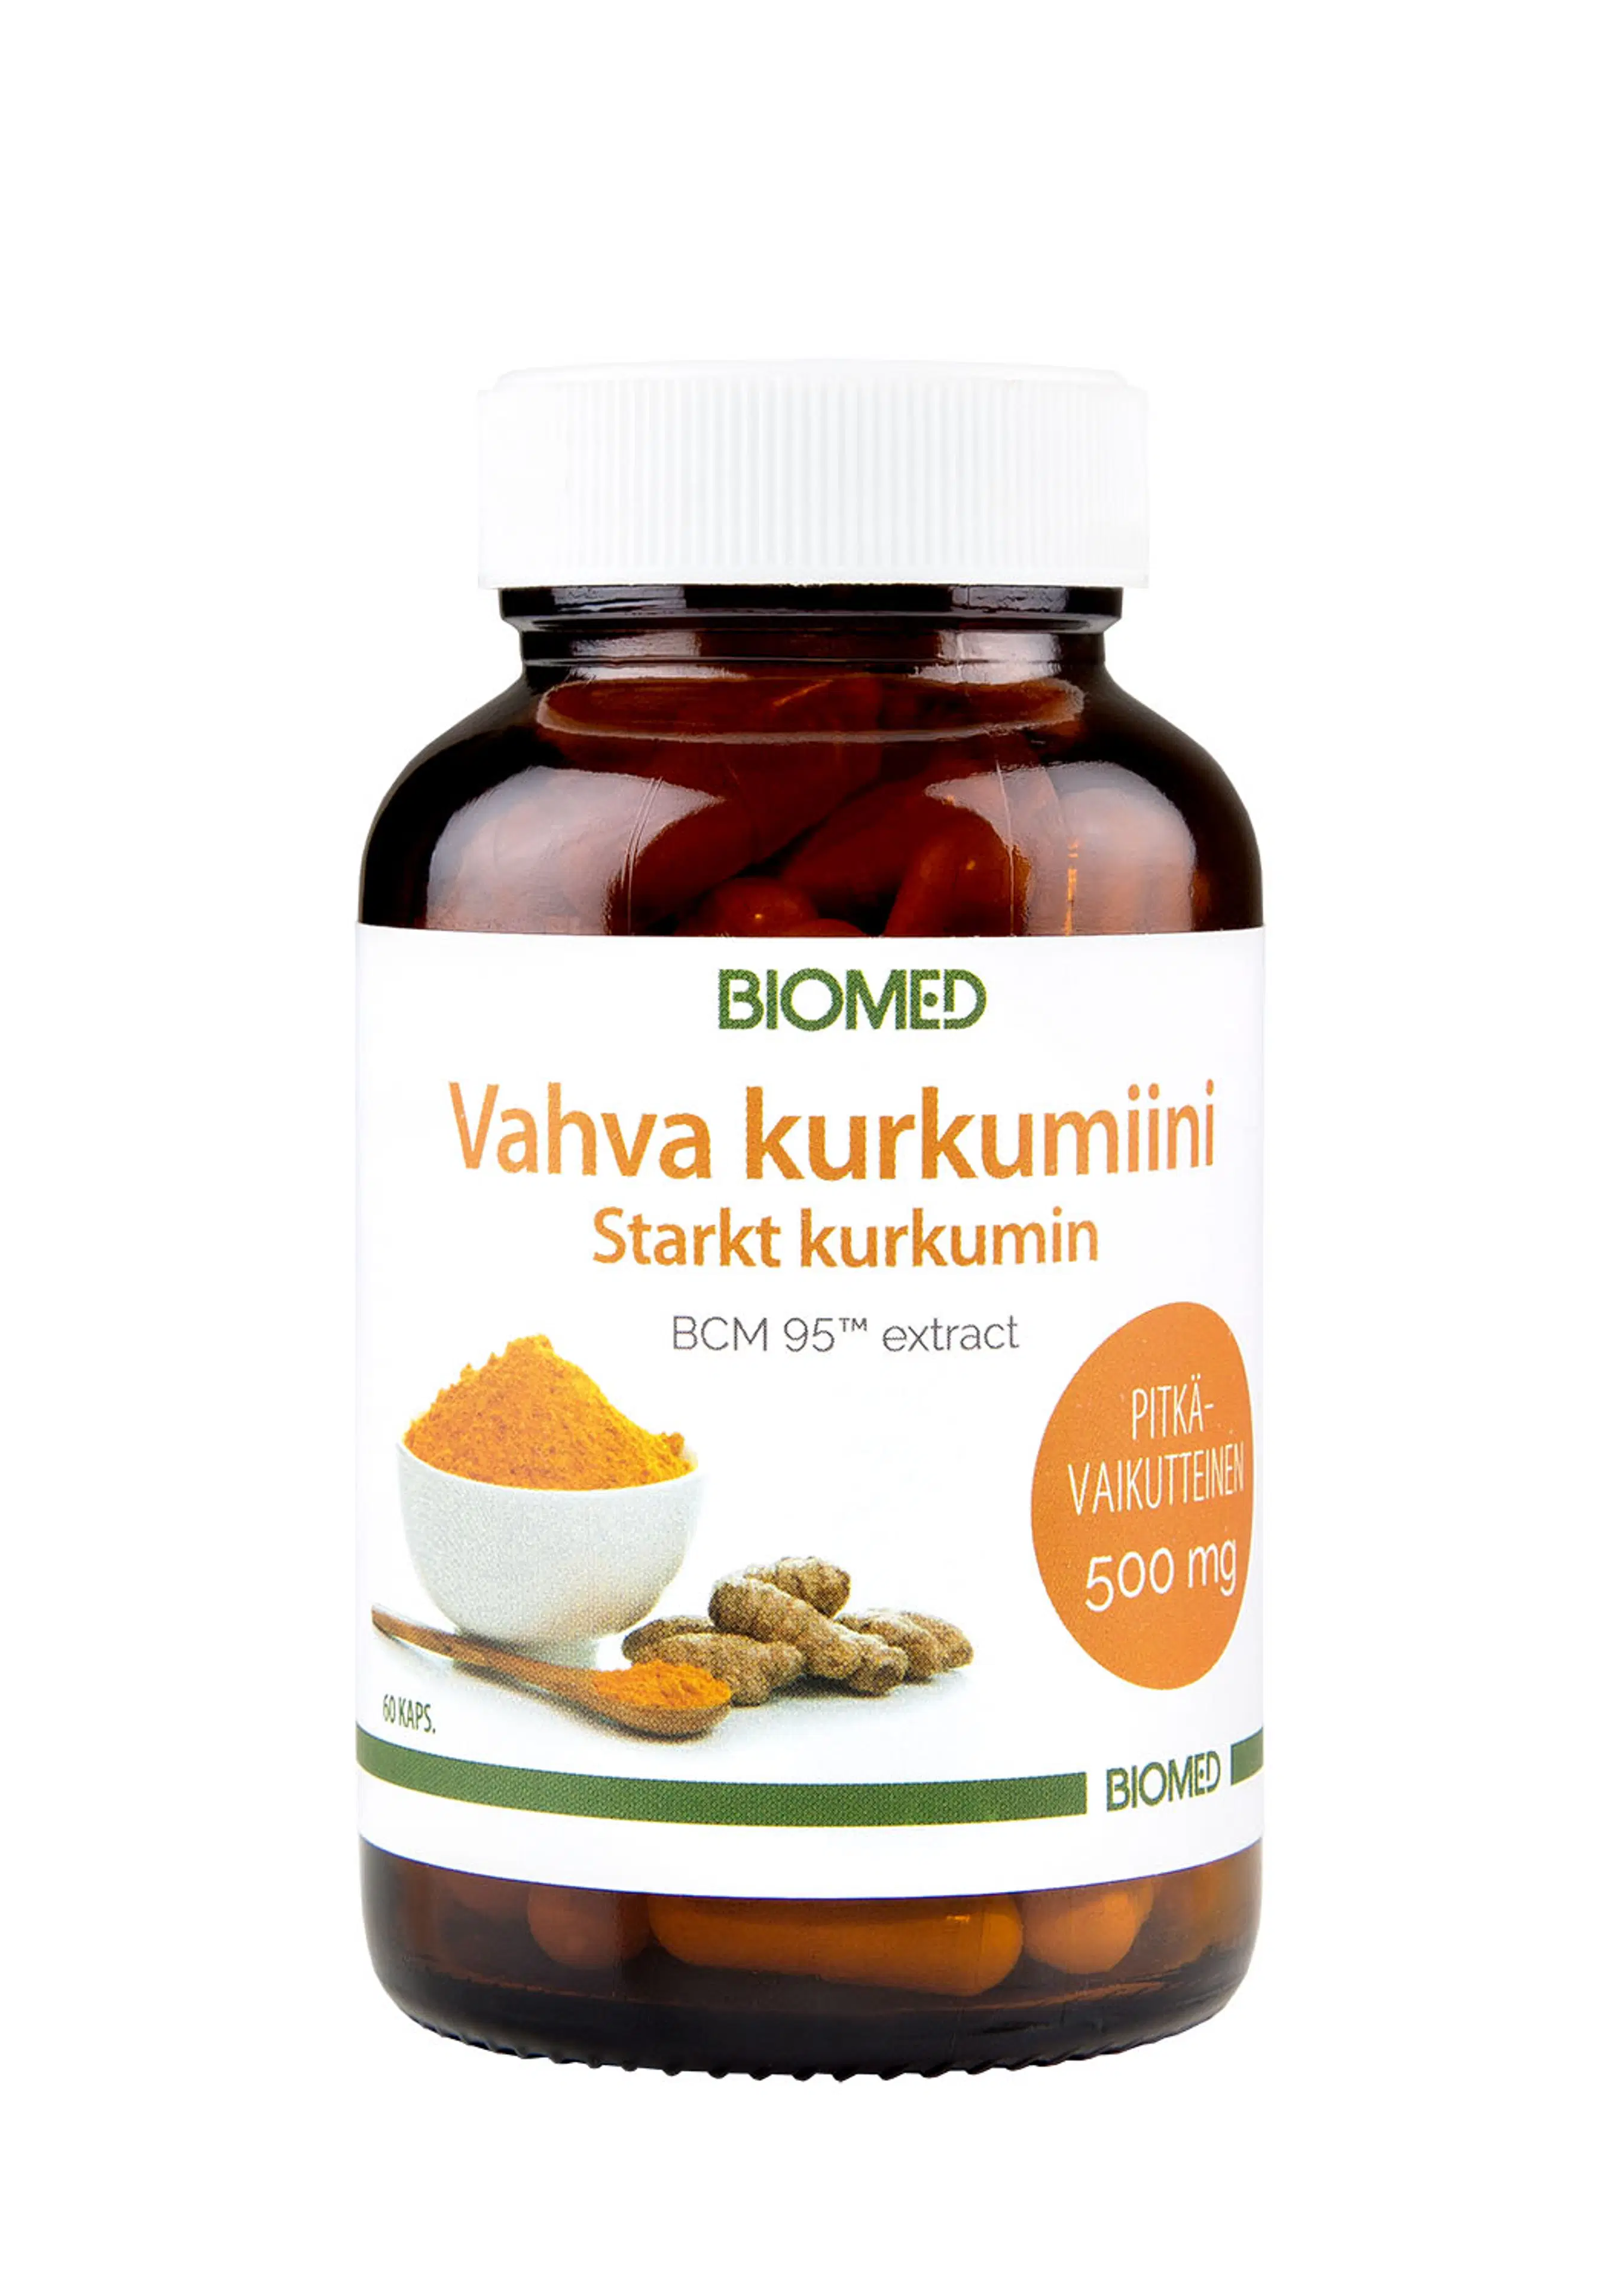 Biomed Vahva Kurkumiini BCM-95®-uute 60 kaps.